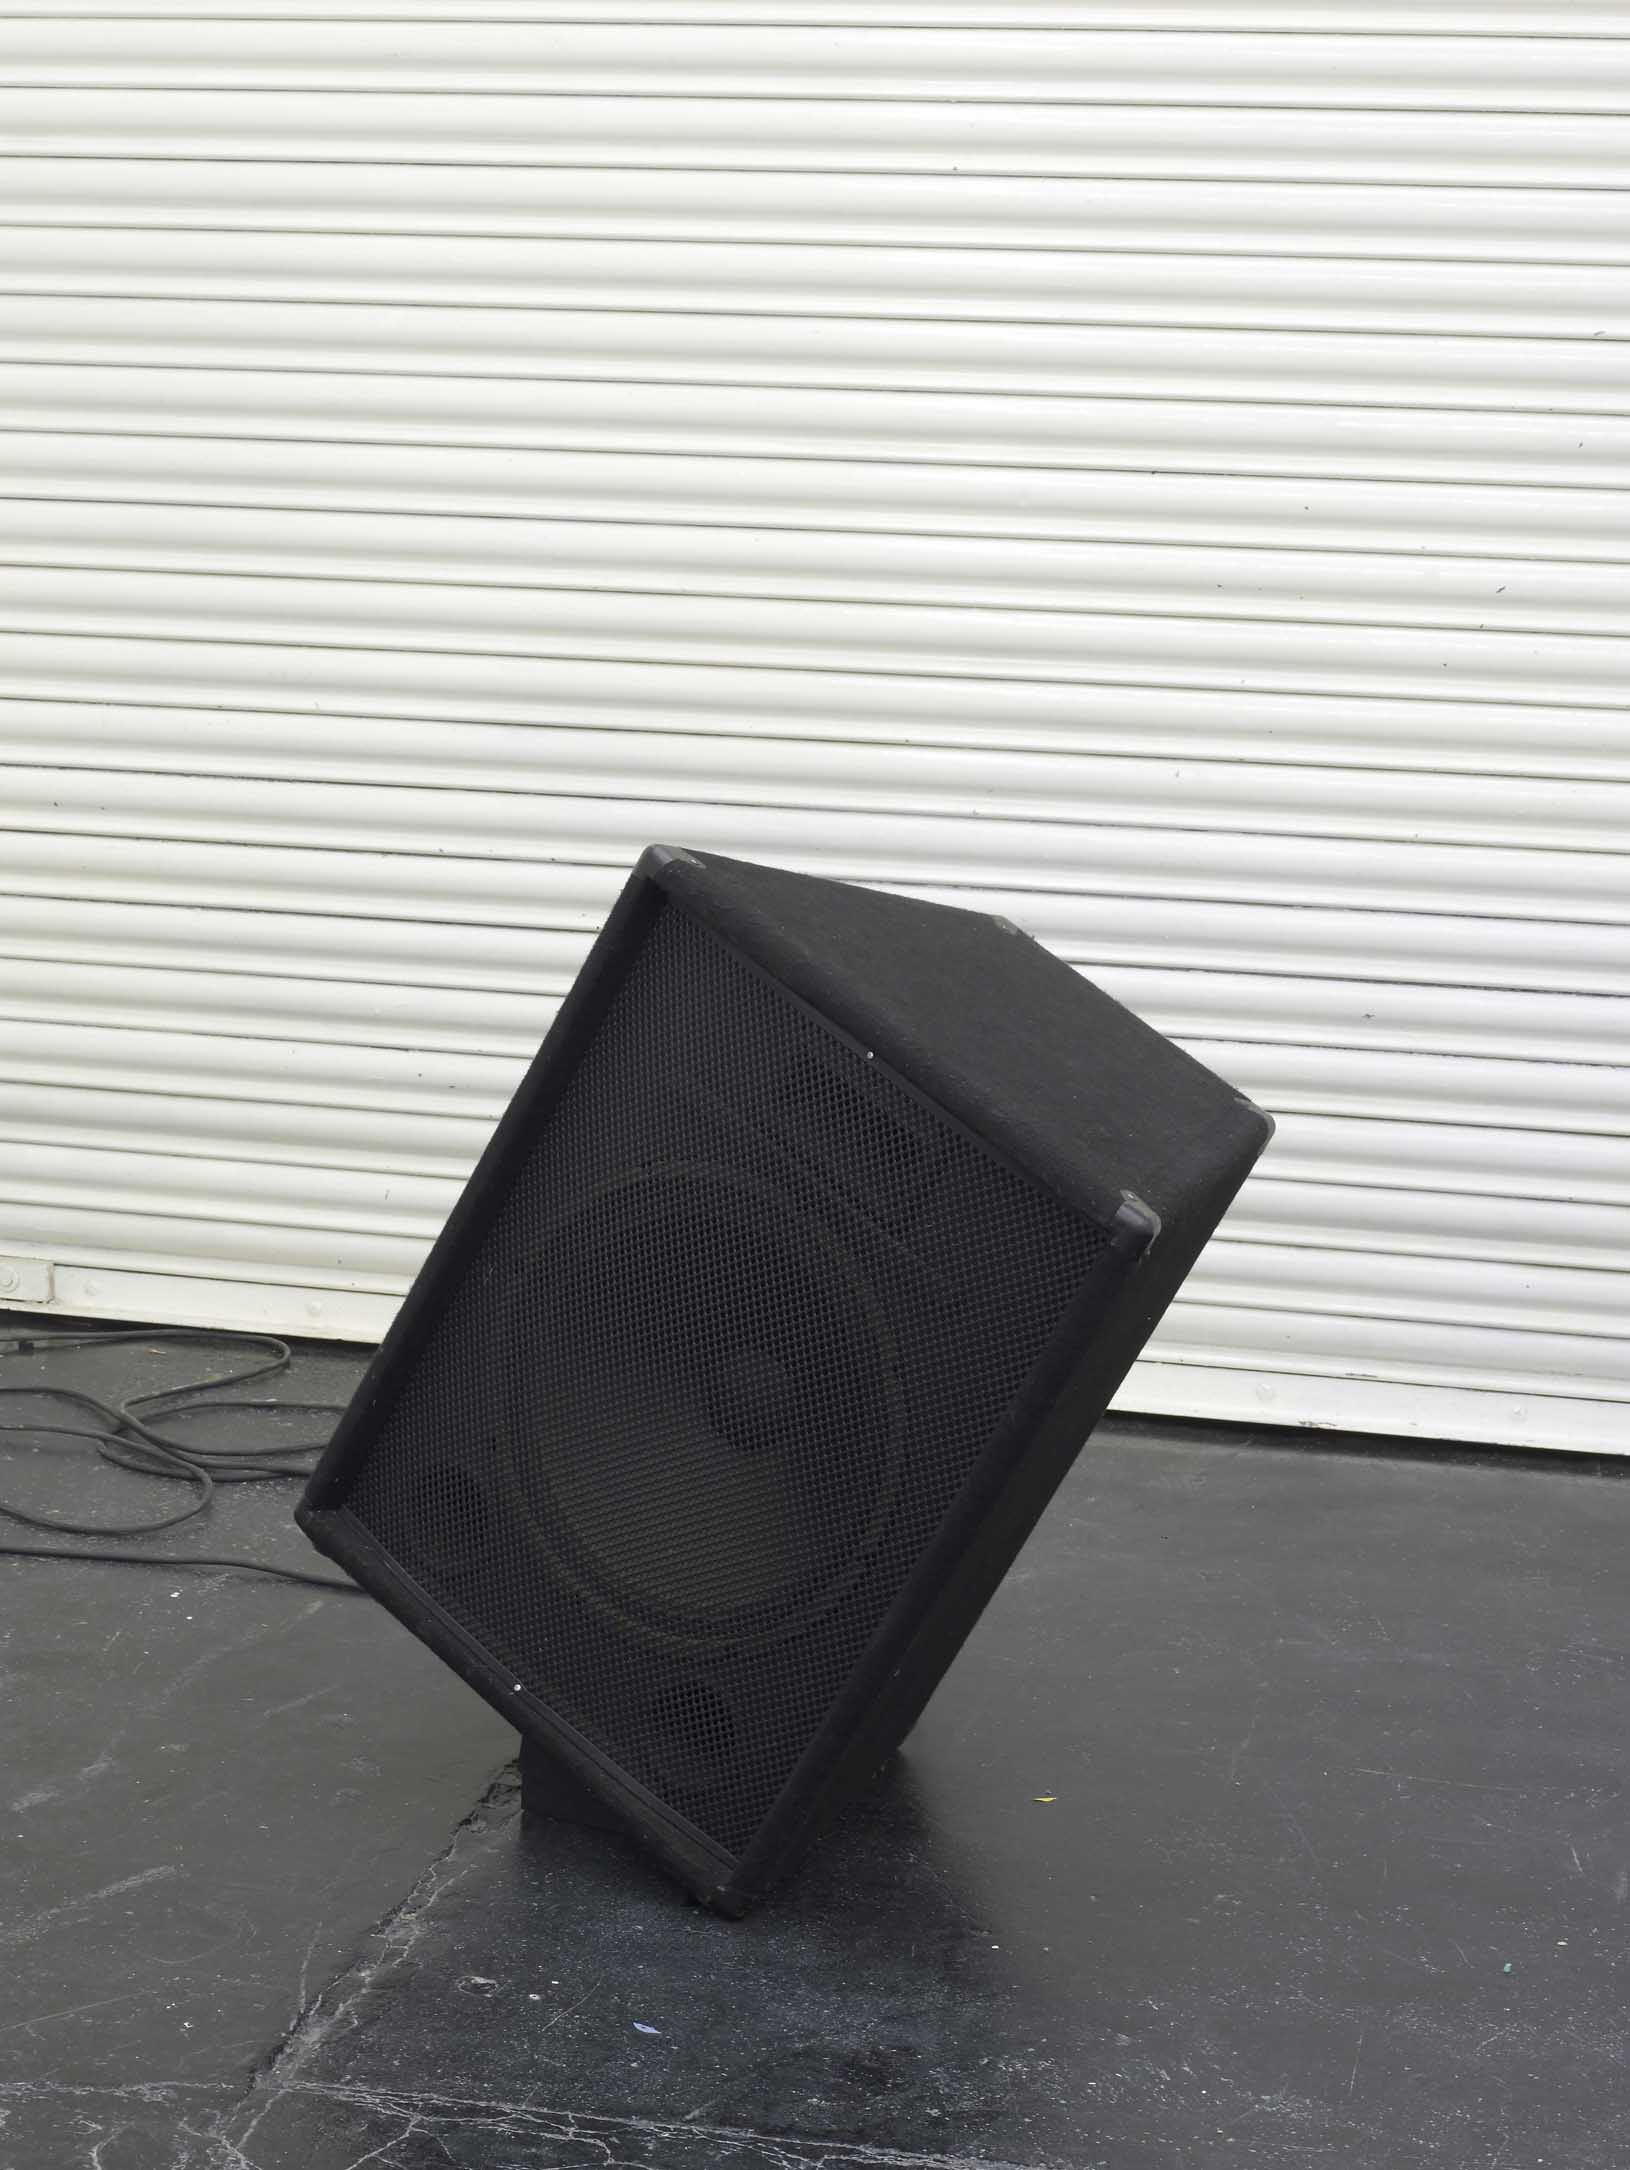     Aloïs Godinat Untitled 2005-2010 Speaker, sound, polyurethane wedge 65 x 51 x 41 cm / 25.6 x 20.1 x 16.1 In 